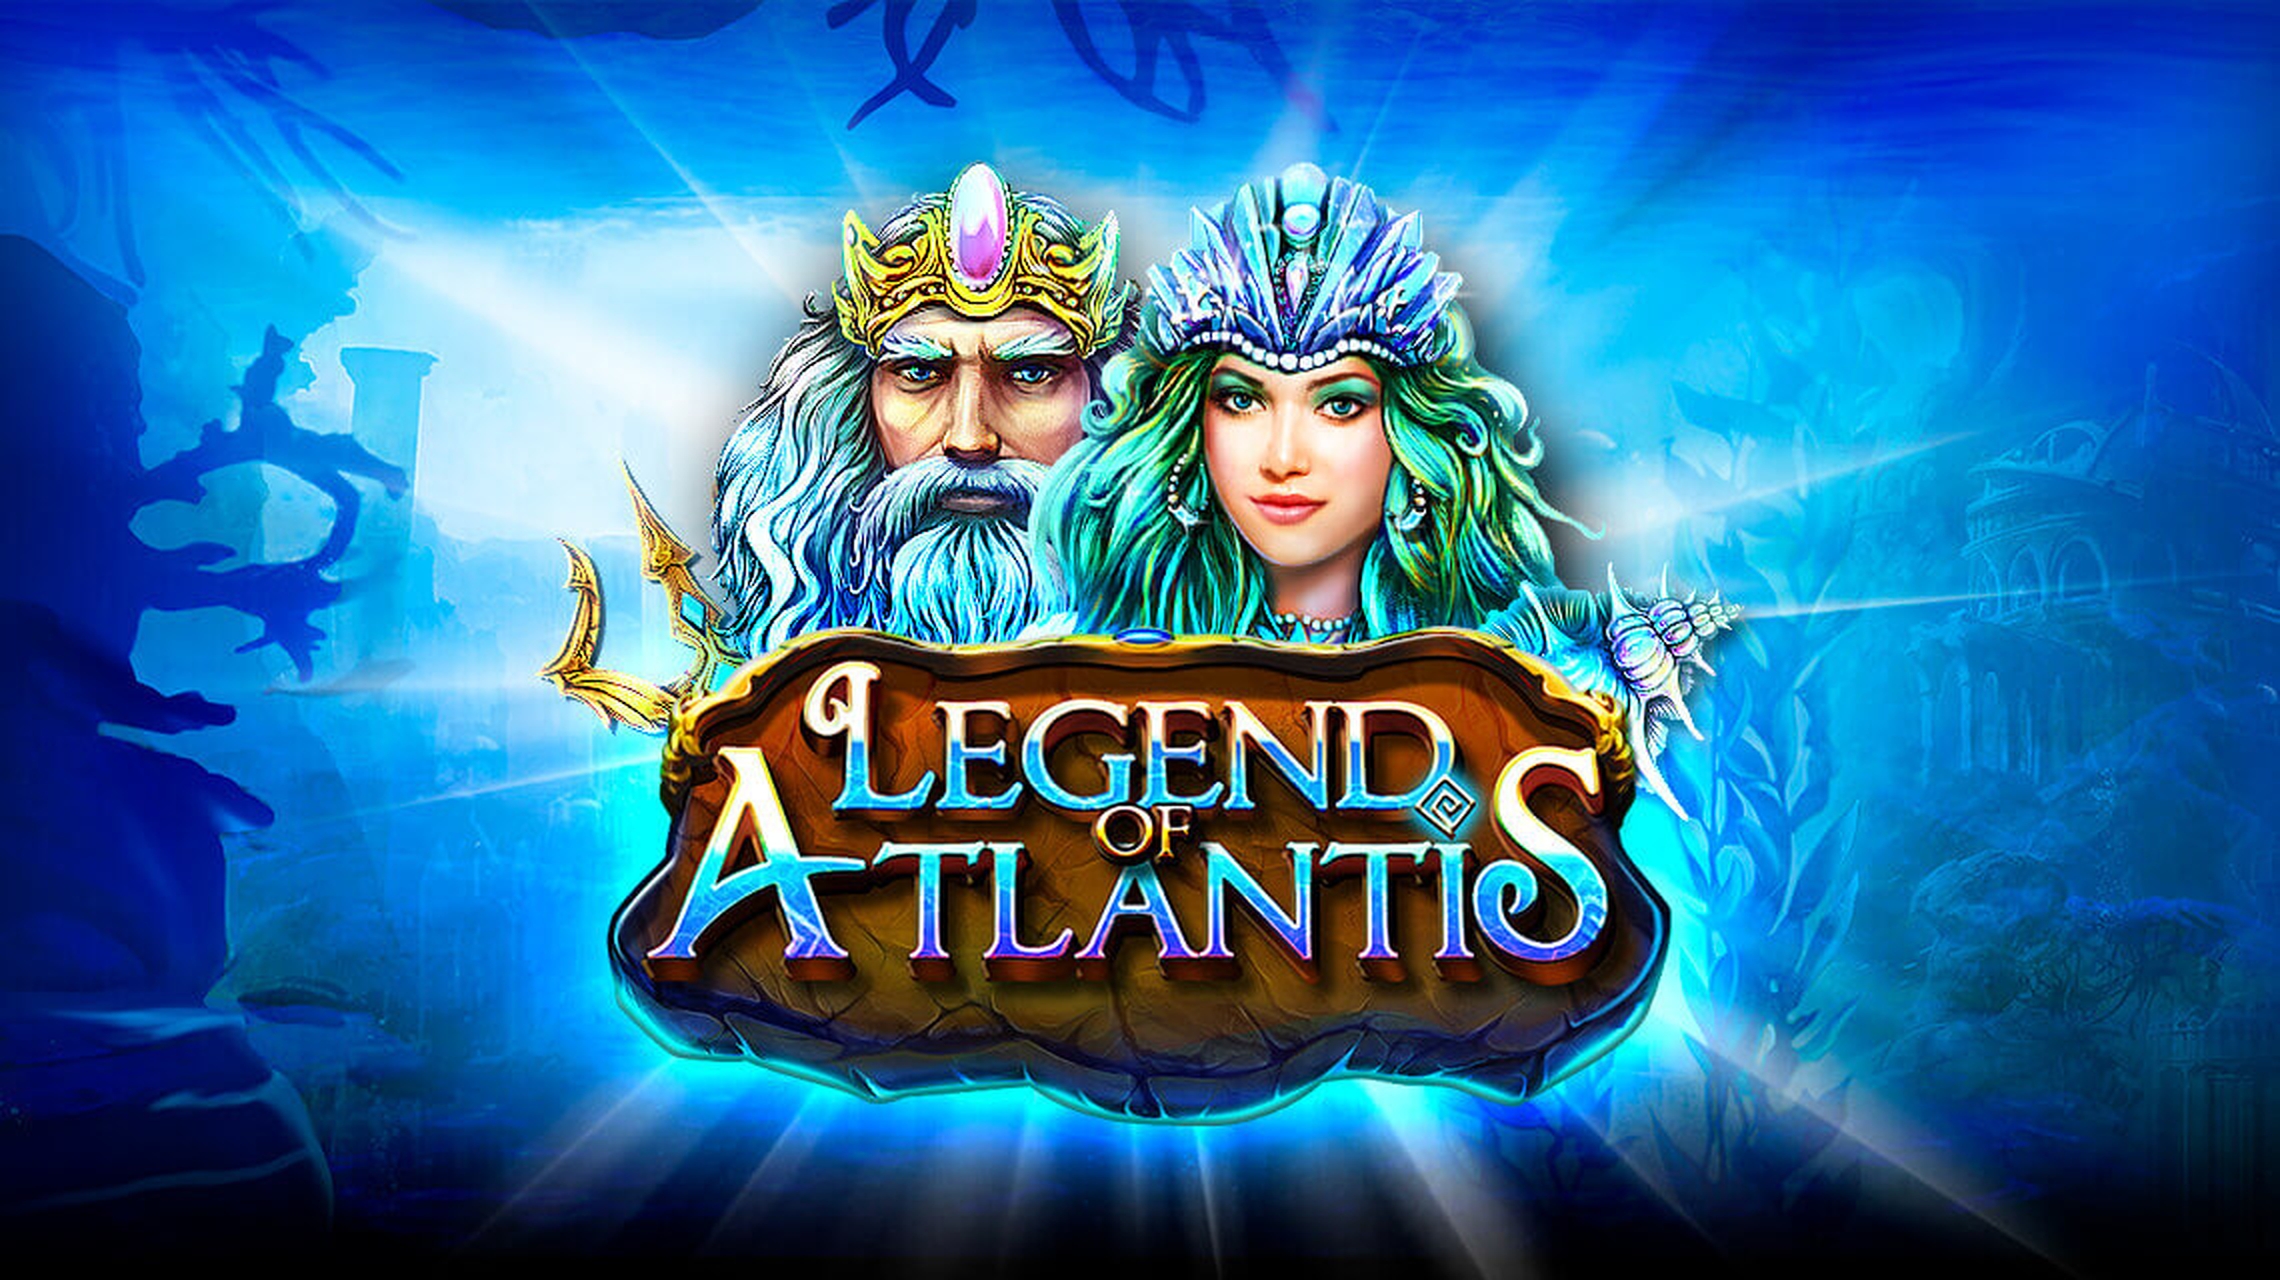 The Legend of Atlantis Online Slot Demo Game by Platipus